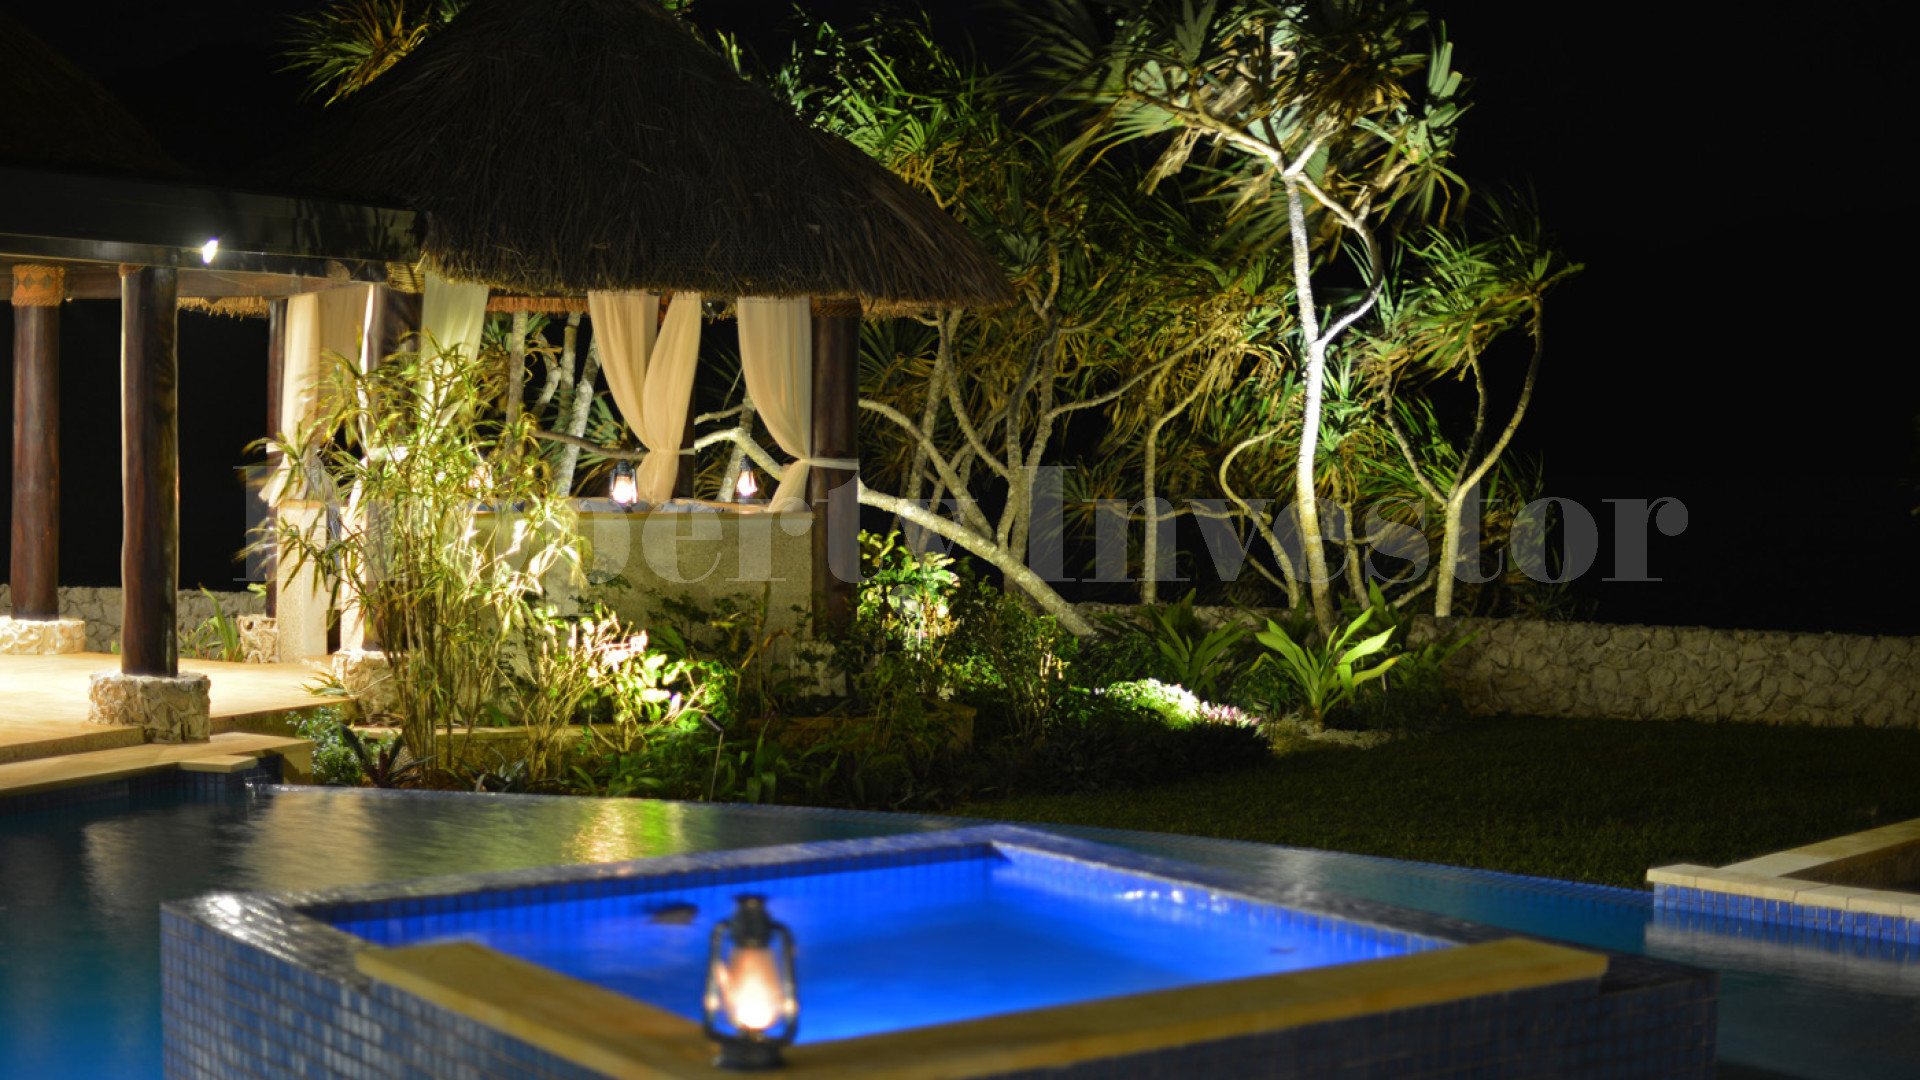 Fabulous 3 Bedroom Luxury Oceafront Private Island Villa for Sale in Vanua Levu, Fiji